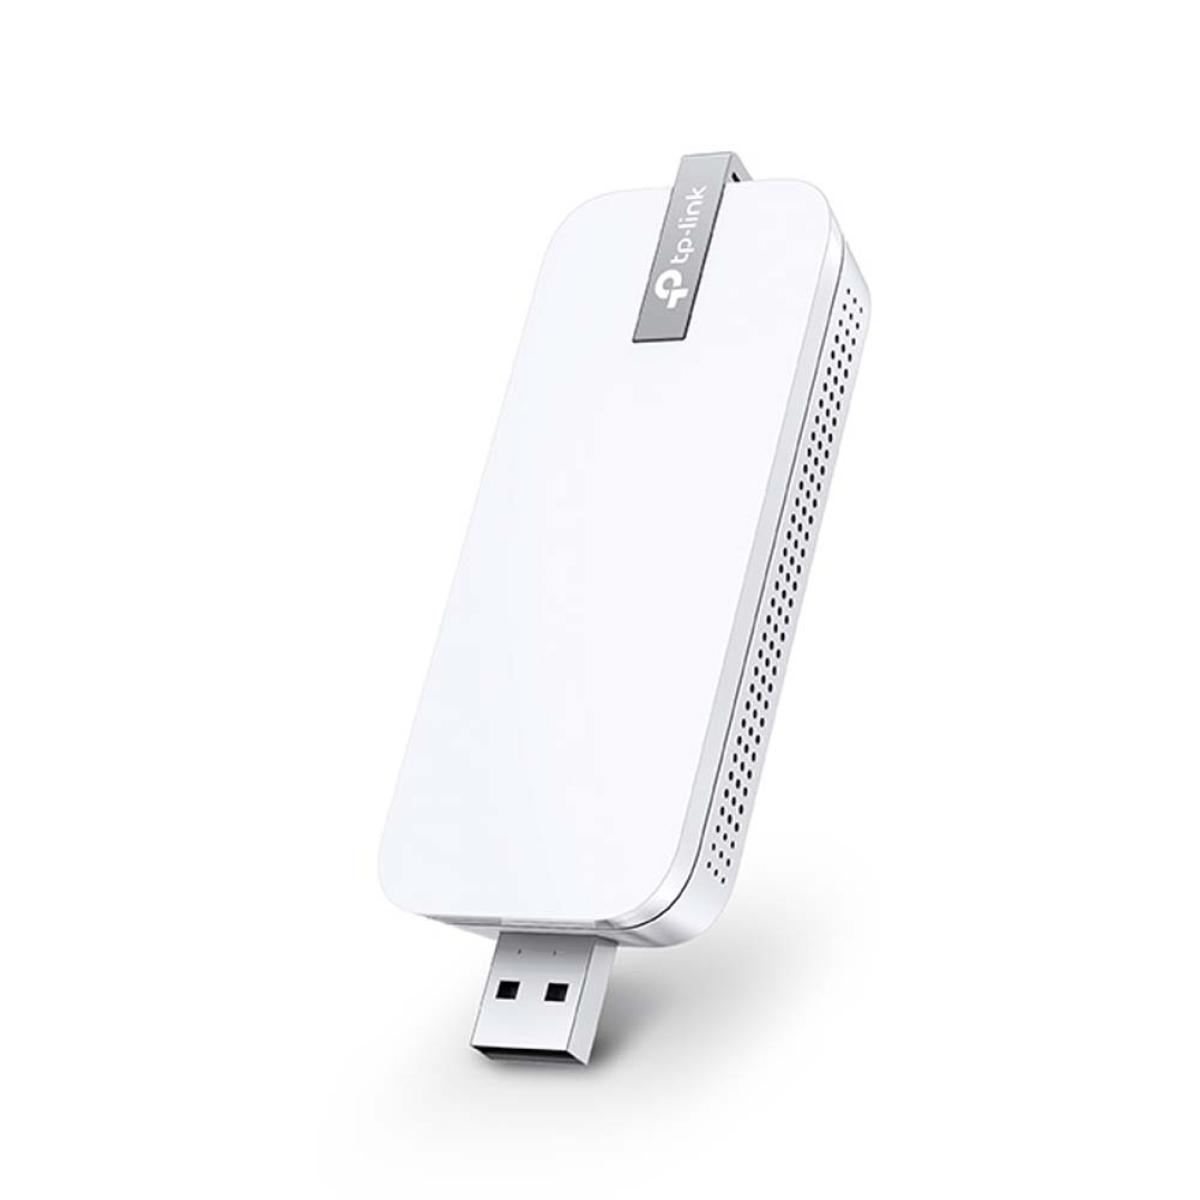 TP-LINK TL-WA820RE 300Mbps USB Wi-Fi Range Extender